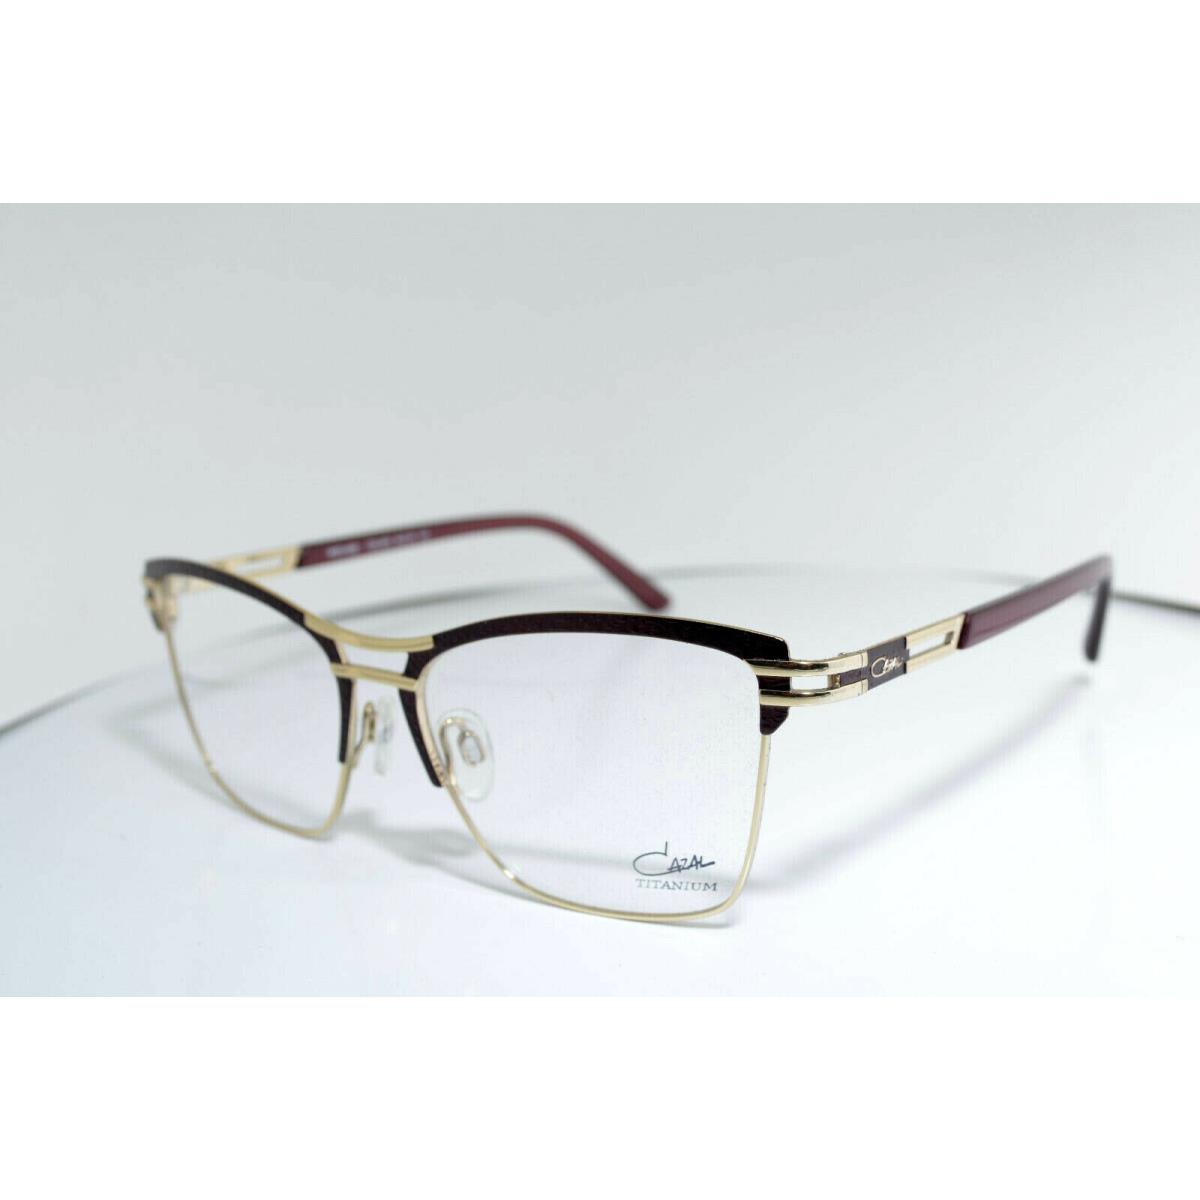 Cazal 4262 C003 Eyeglasses Frame